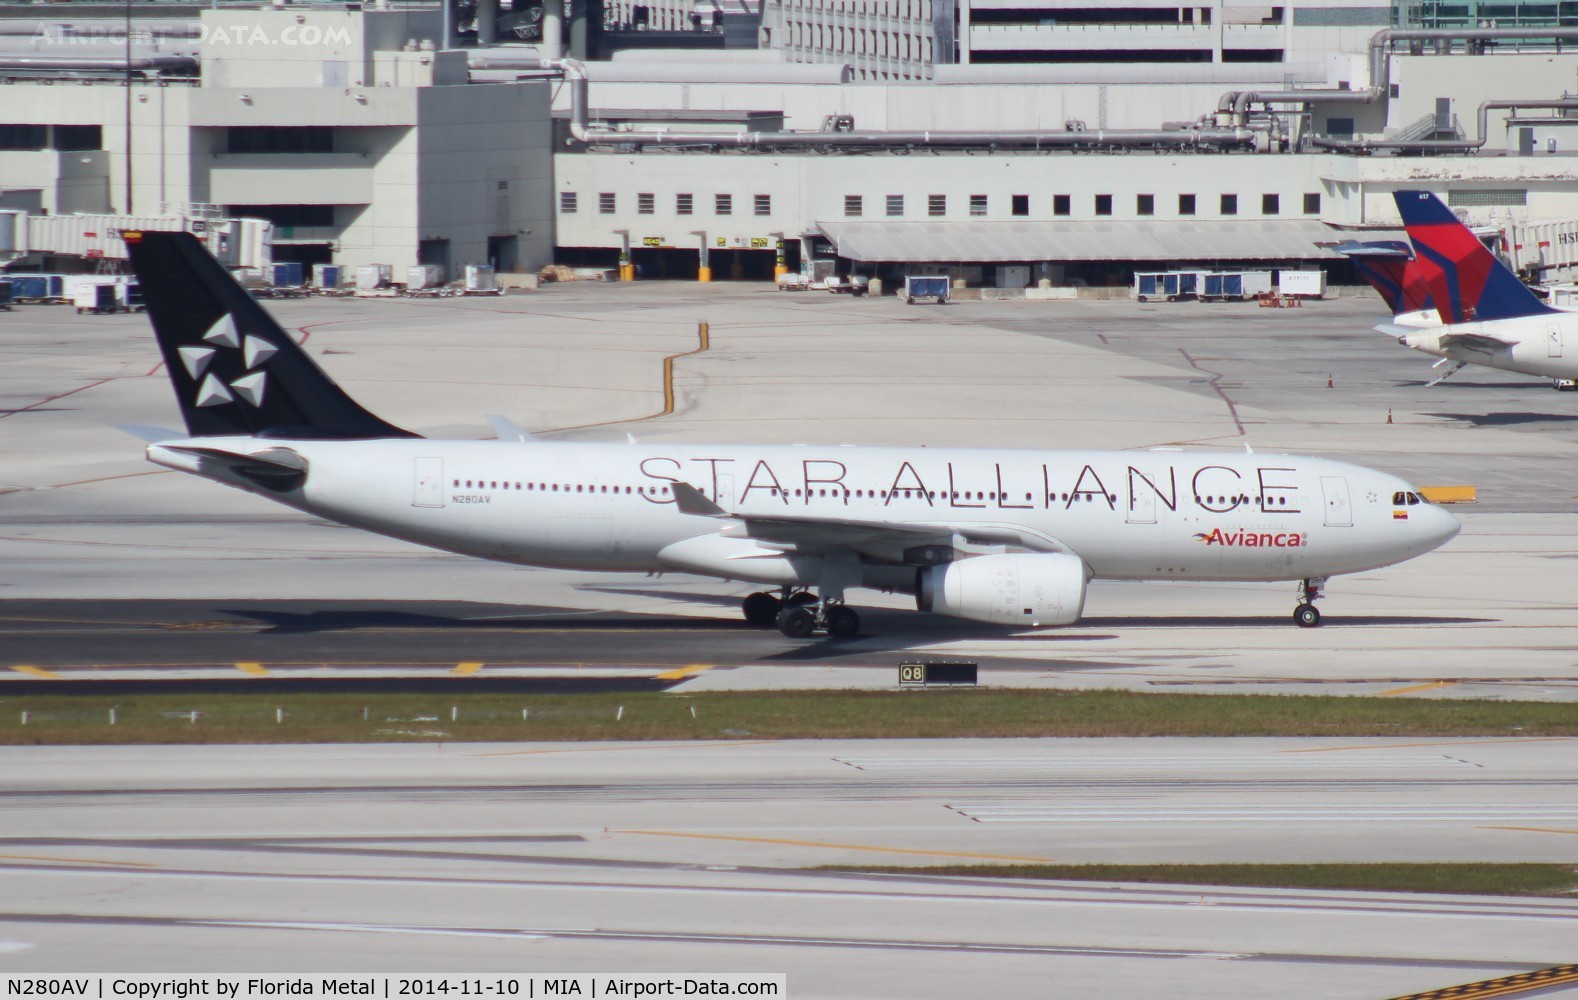 N280AV, 2013 Airbus A330-243 C/N 1400, Avianca Star Alliance